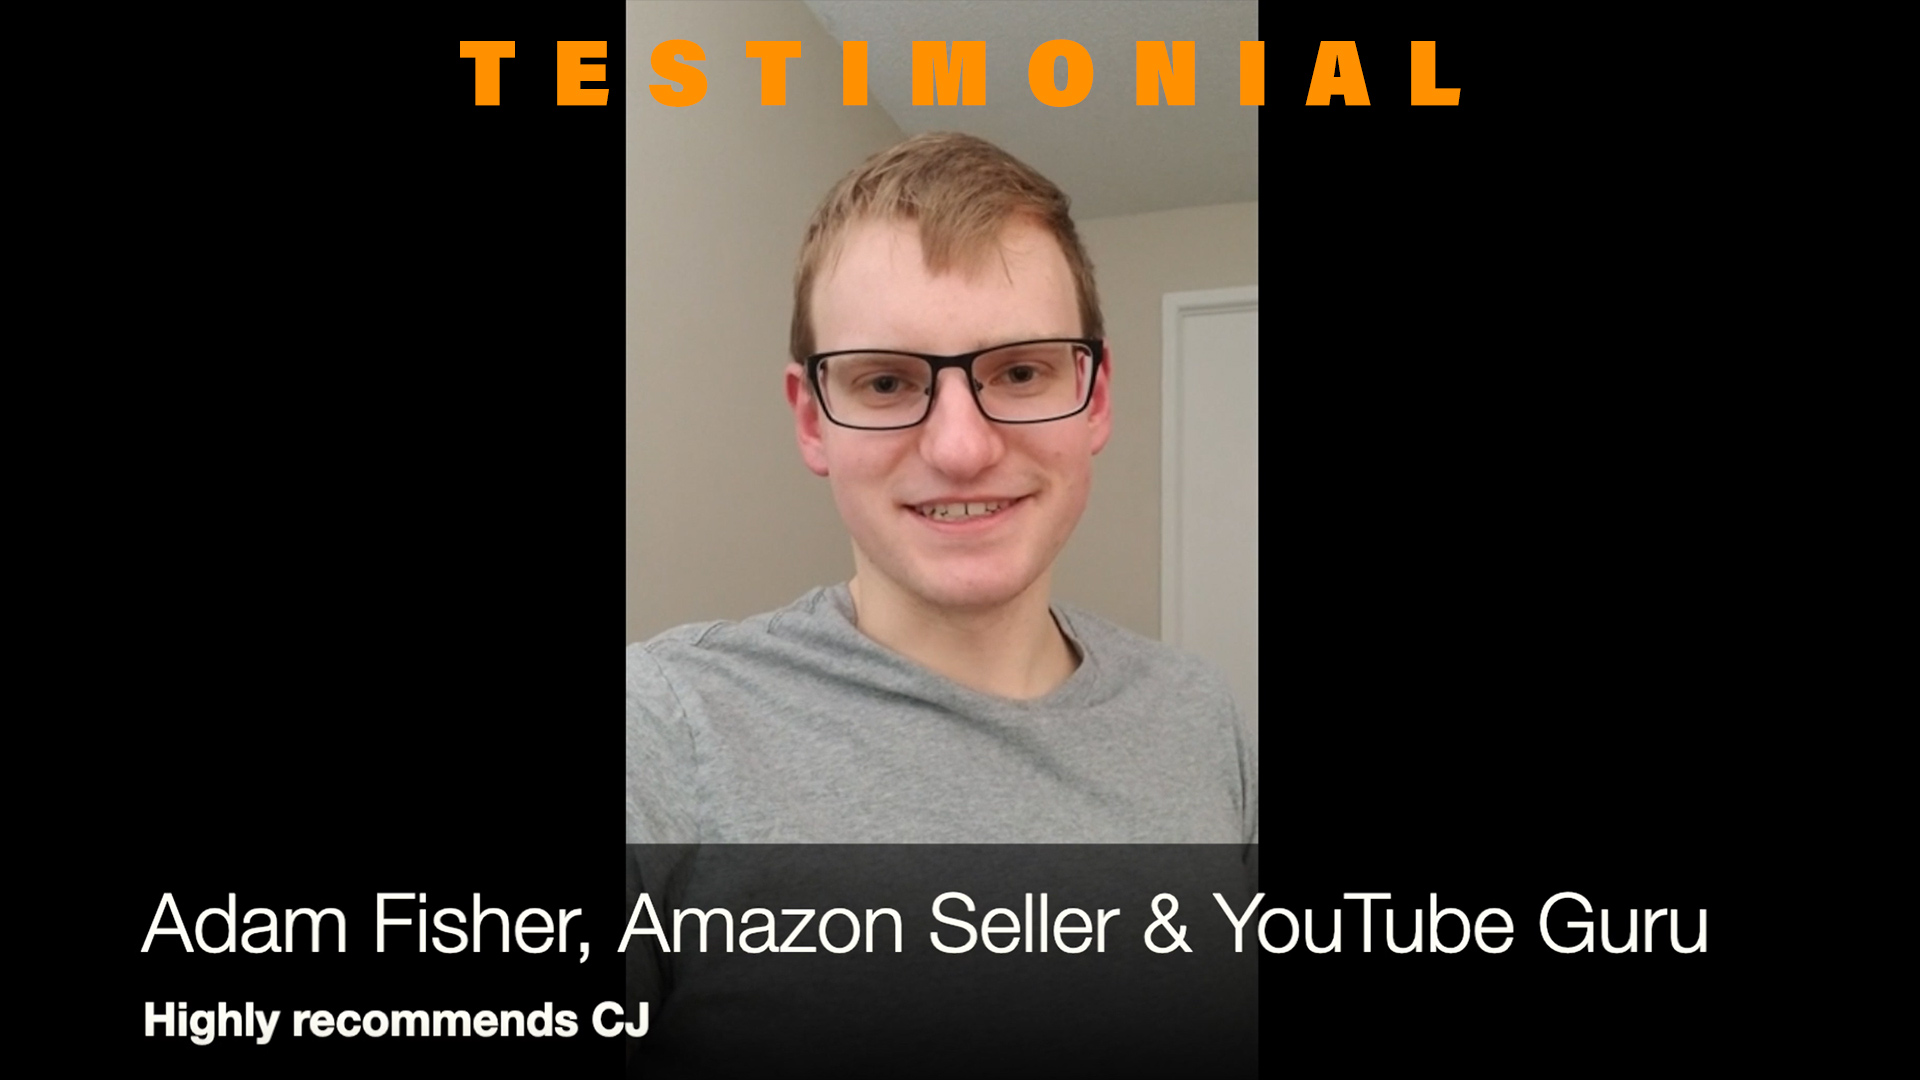 Amazon Seller Testimonial - Easy to Communicate With CJ